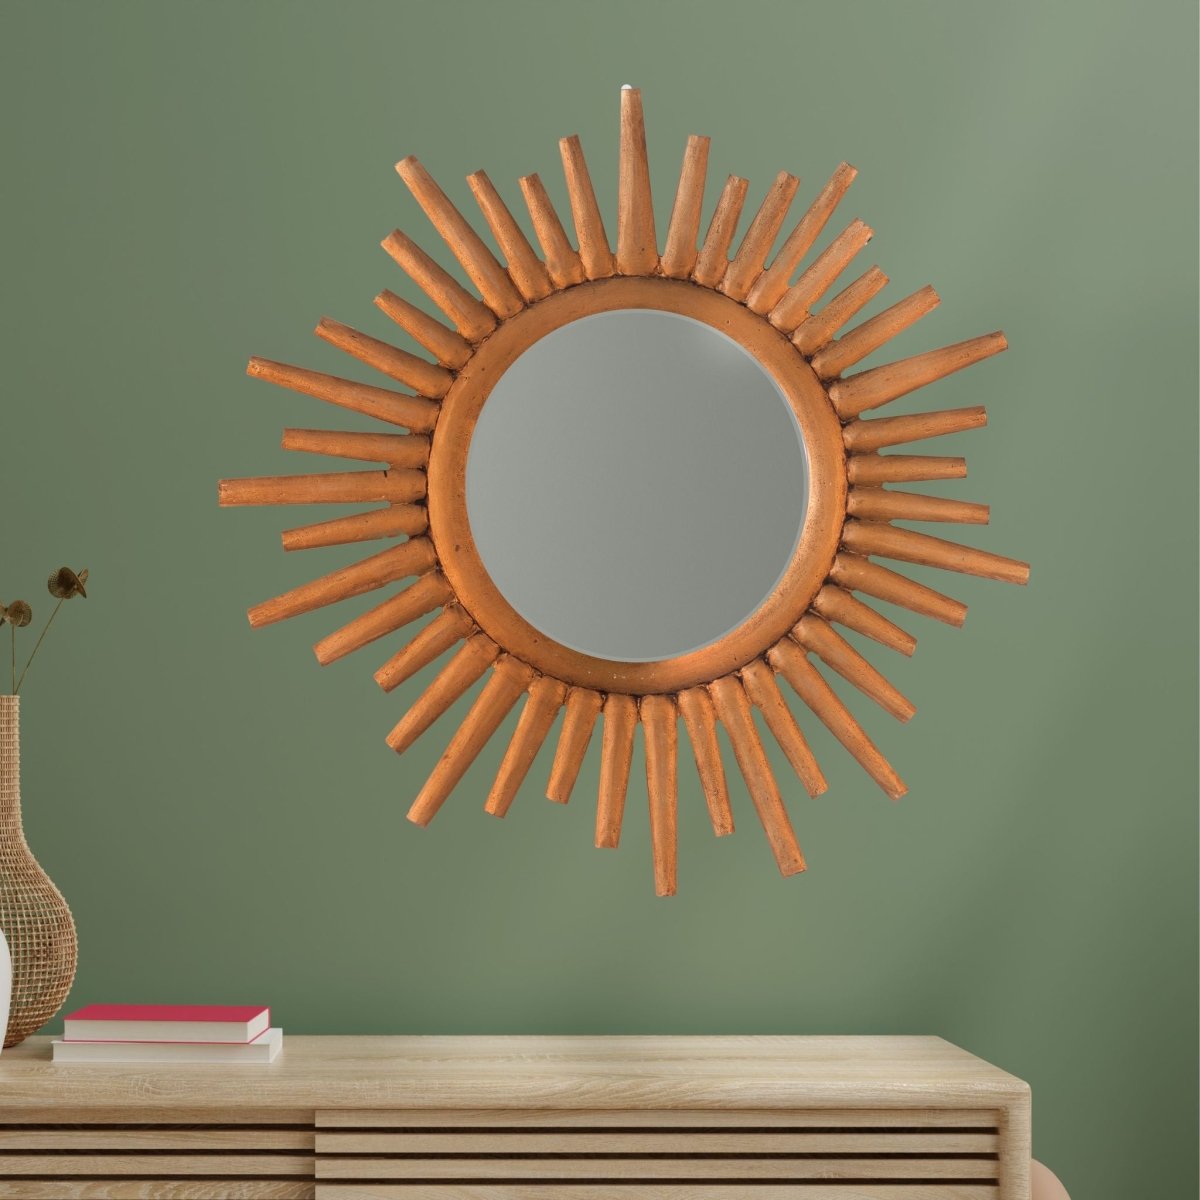 Kezevel Wooden Wall Hanging Mirror - Round Matt Golden Handcarved Decorative Mirrors for Living Room, Wall Showpiece